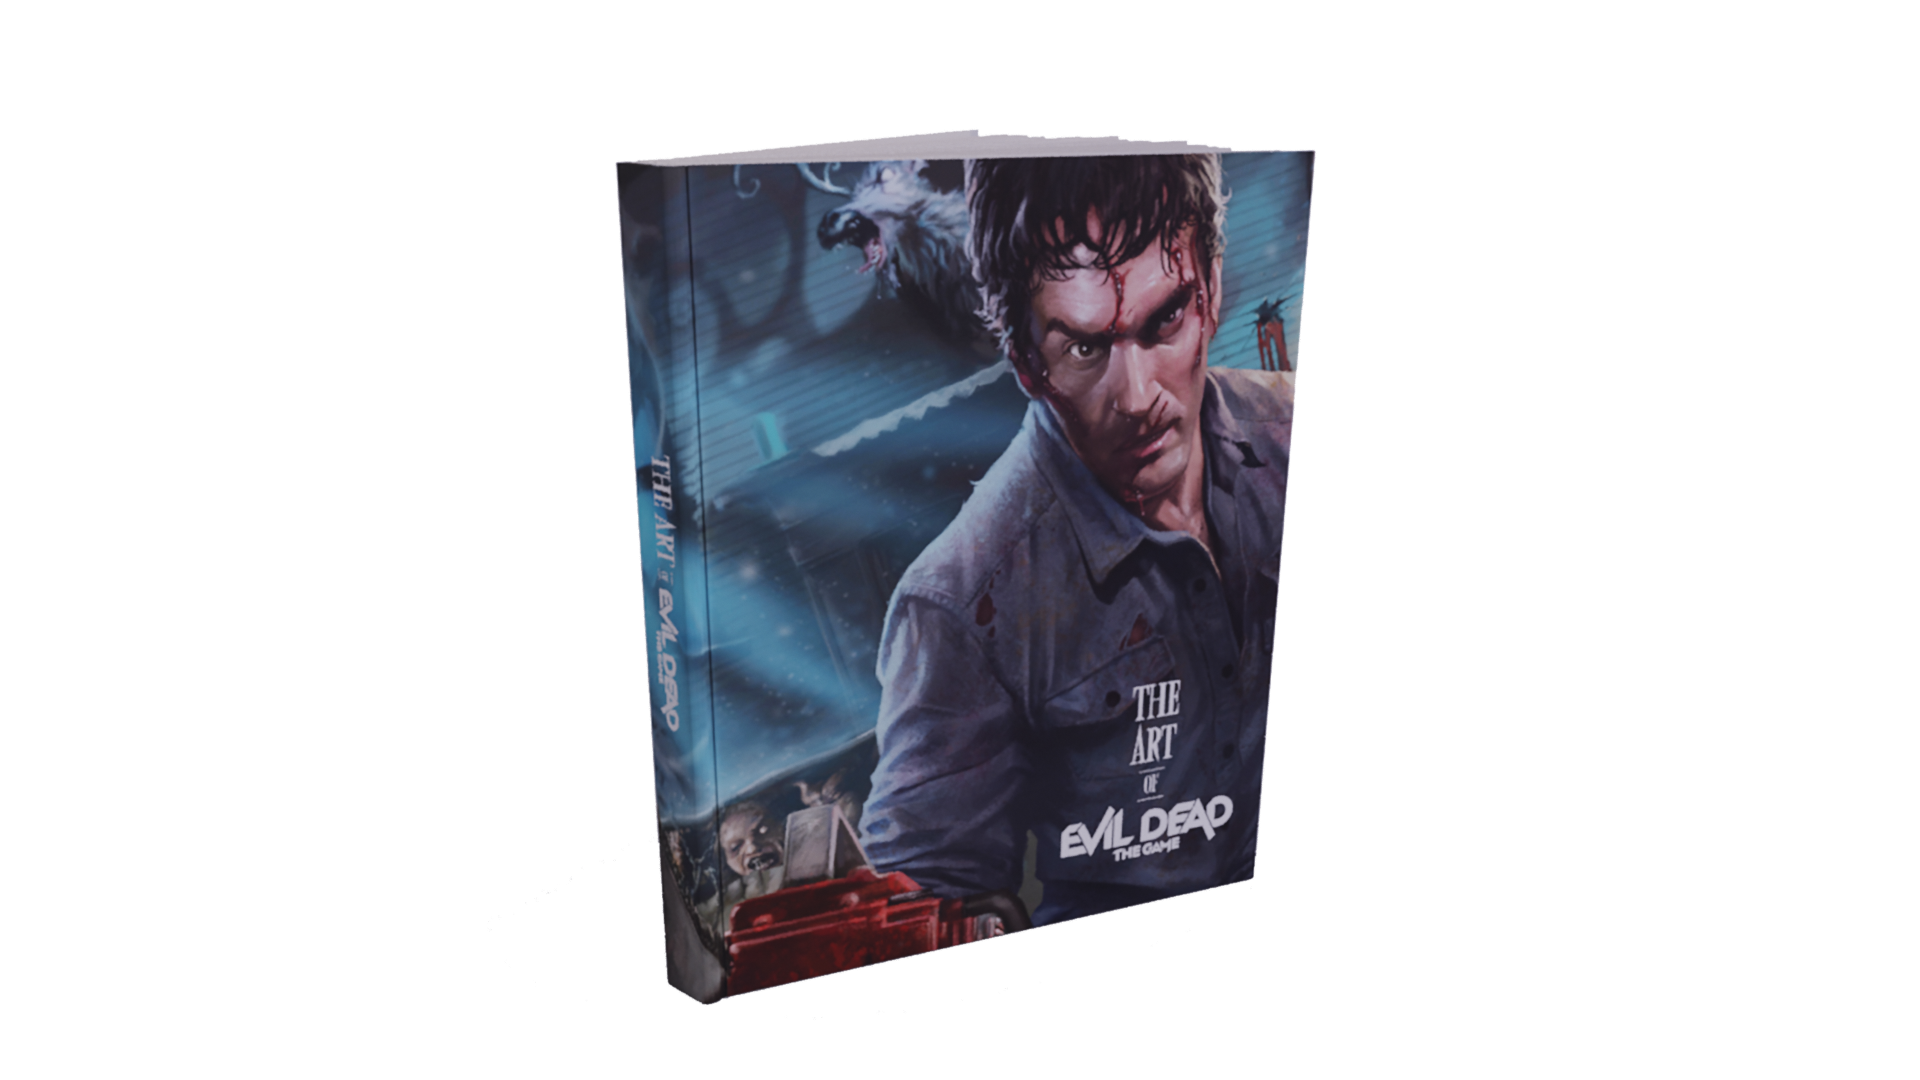 Xbox360 - Evil Dead : The Game Steelbook  Hi-Def Ninja - Pop Culture -  Movie Collectible Community